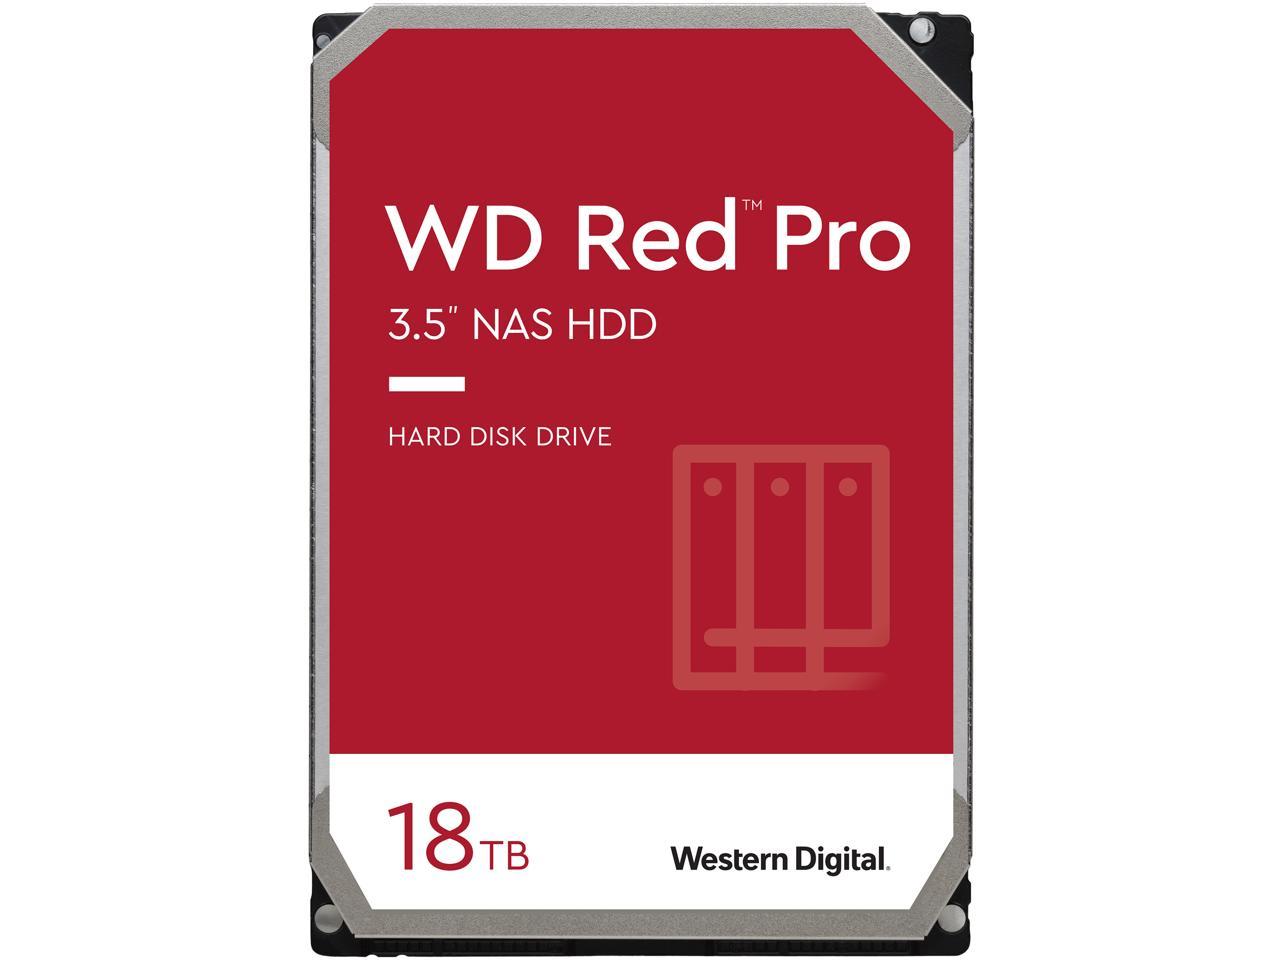 18TB WD Red Pro NAS Hard Drive $370